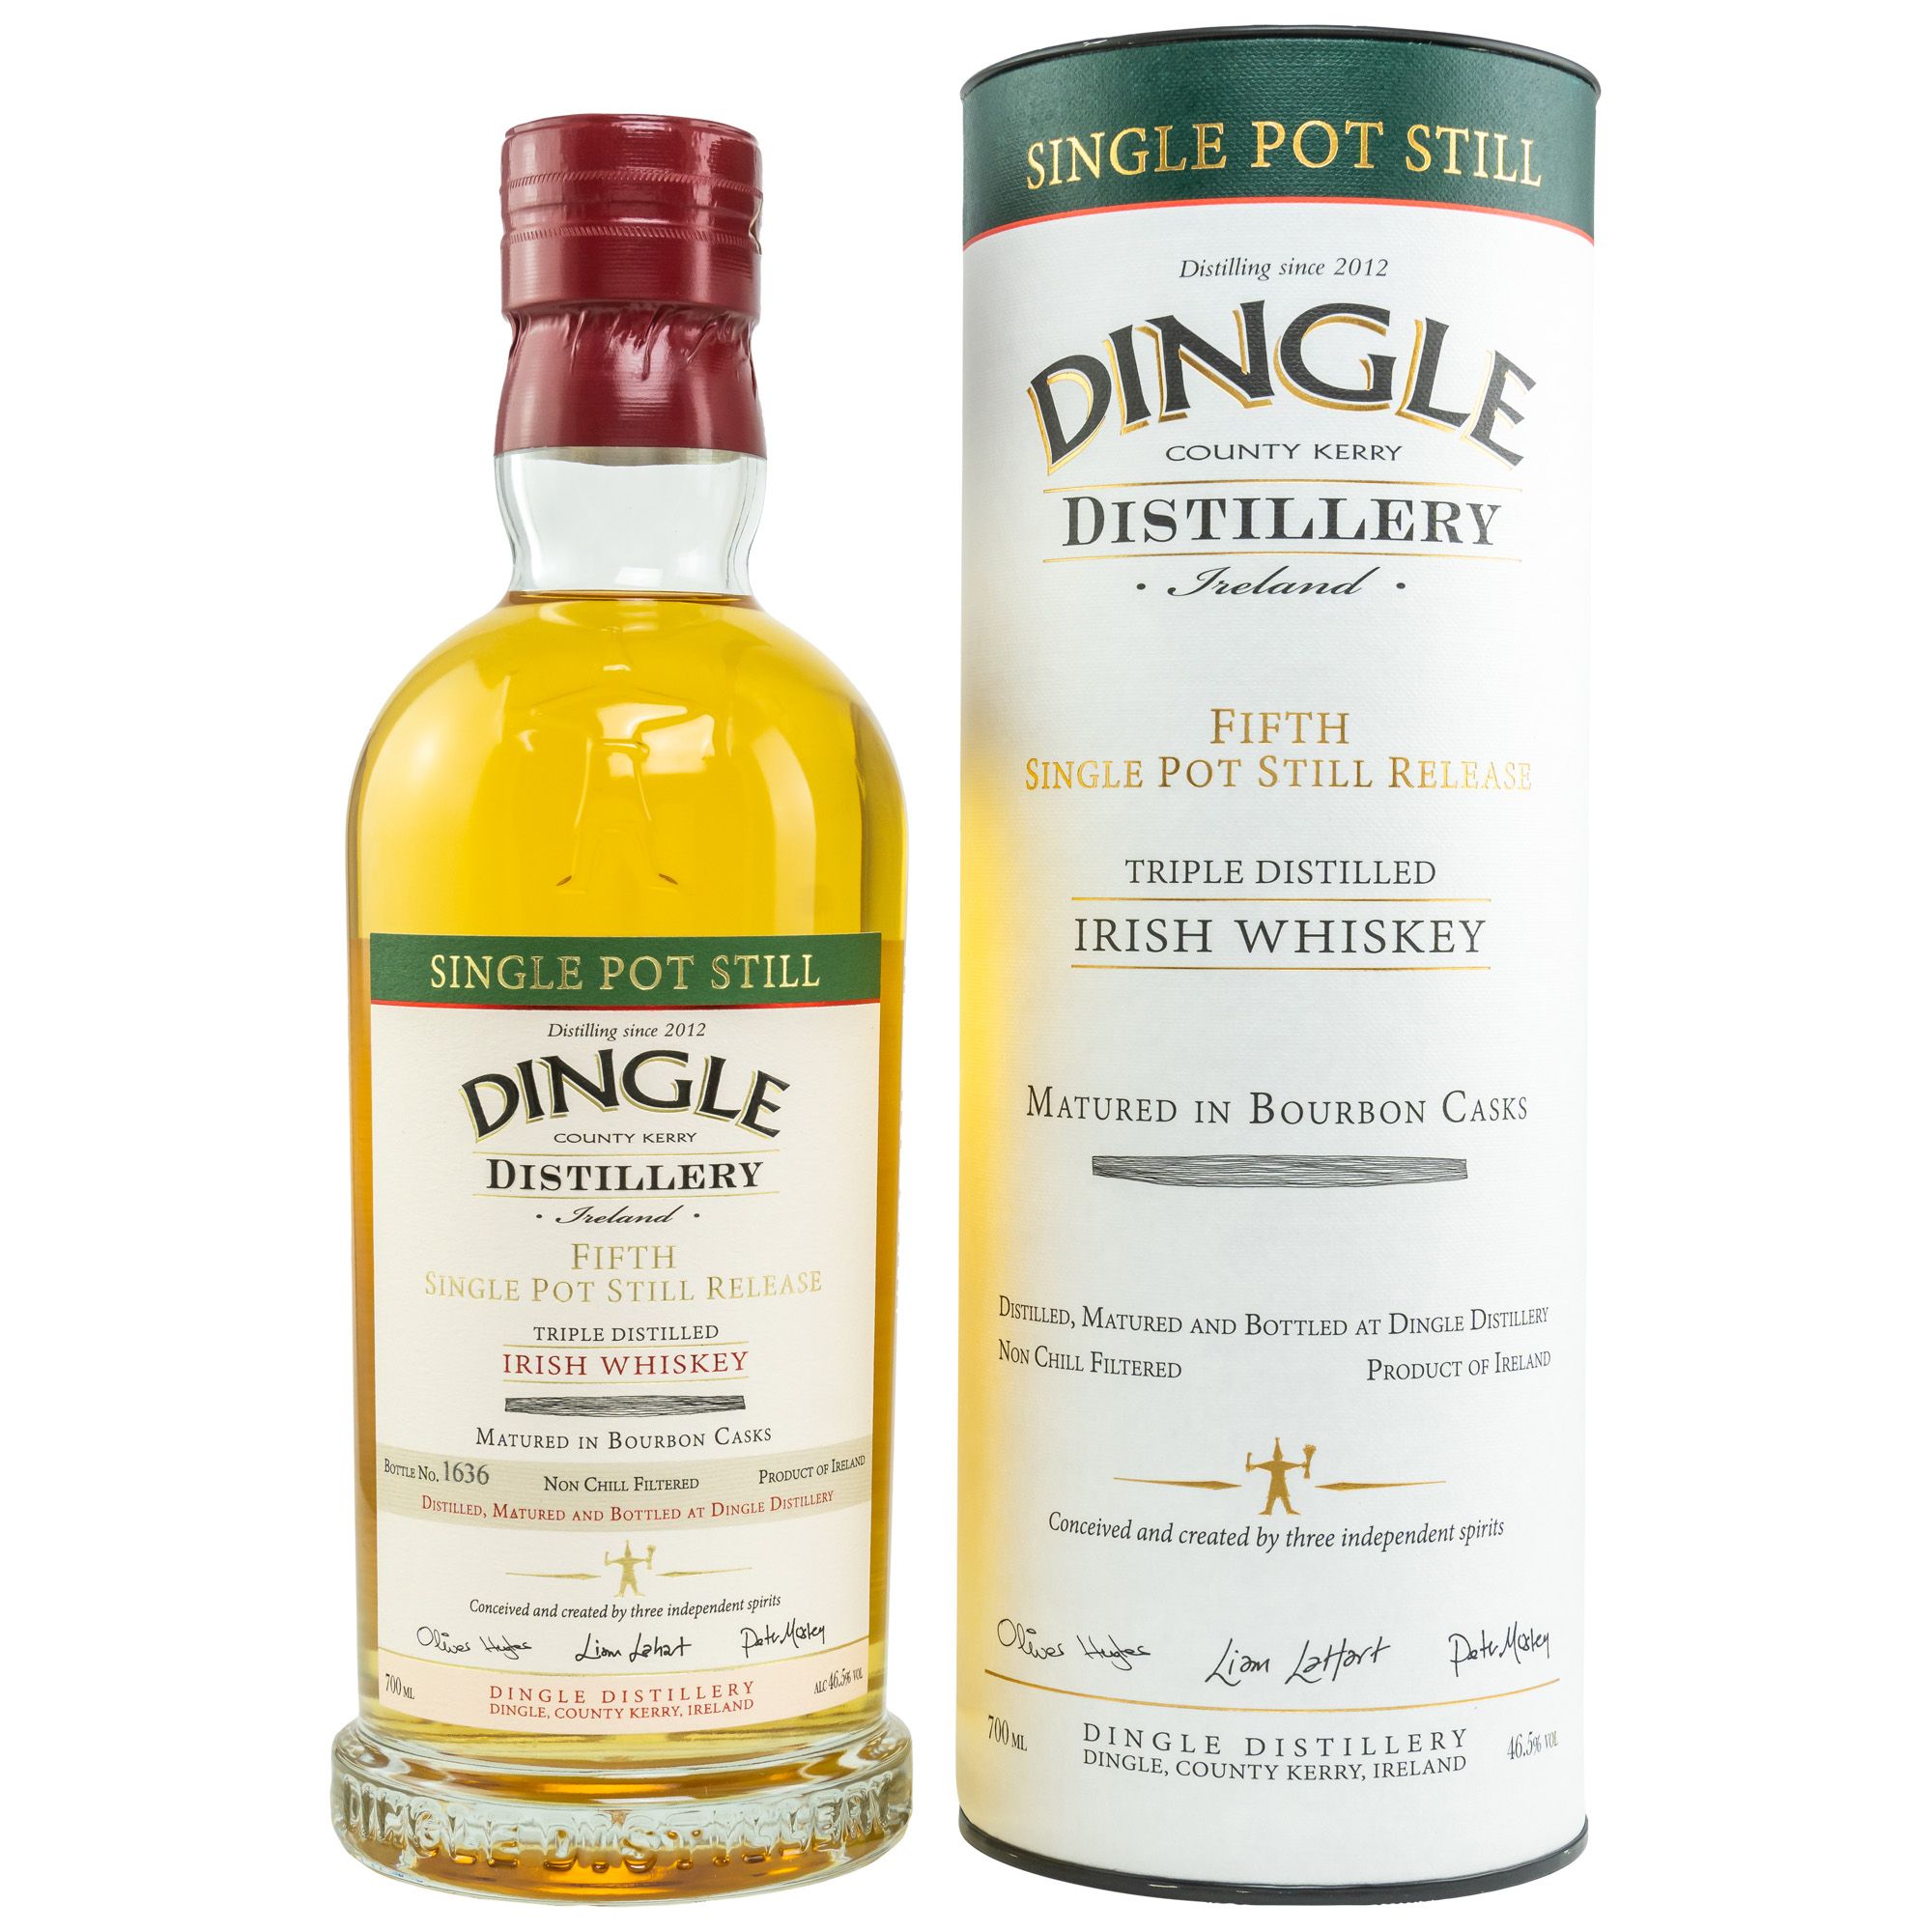 Dingle Fifth Single Pot Still Release Triple Distilled Irish Whiskey 46,5% 0,7l